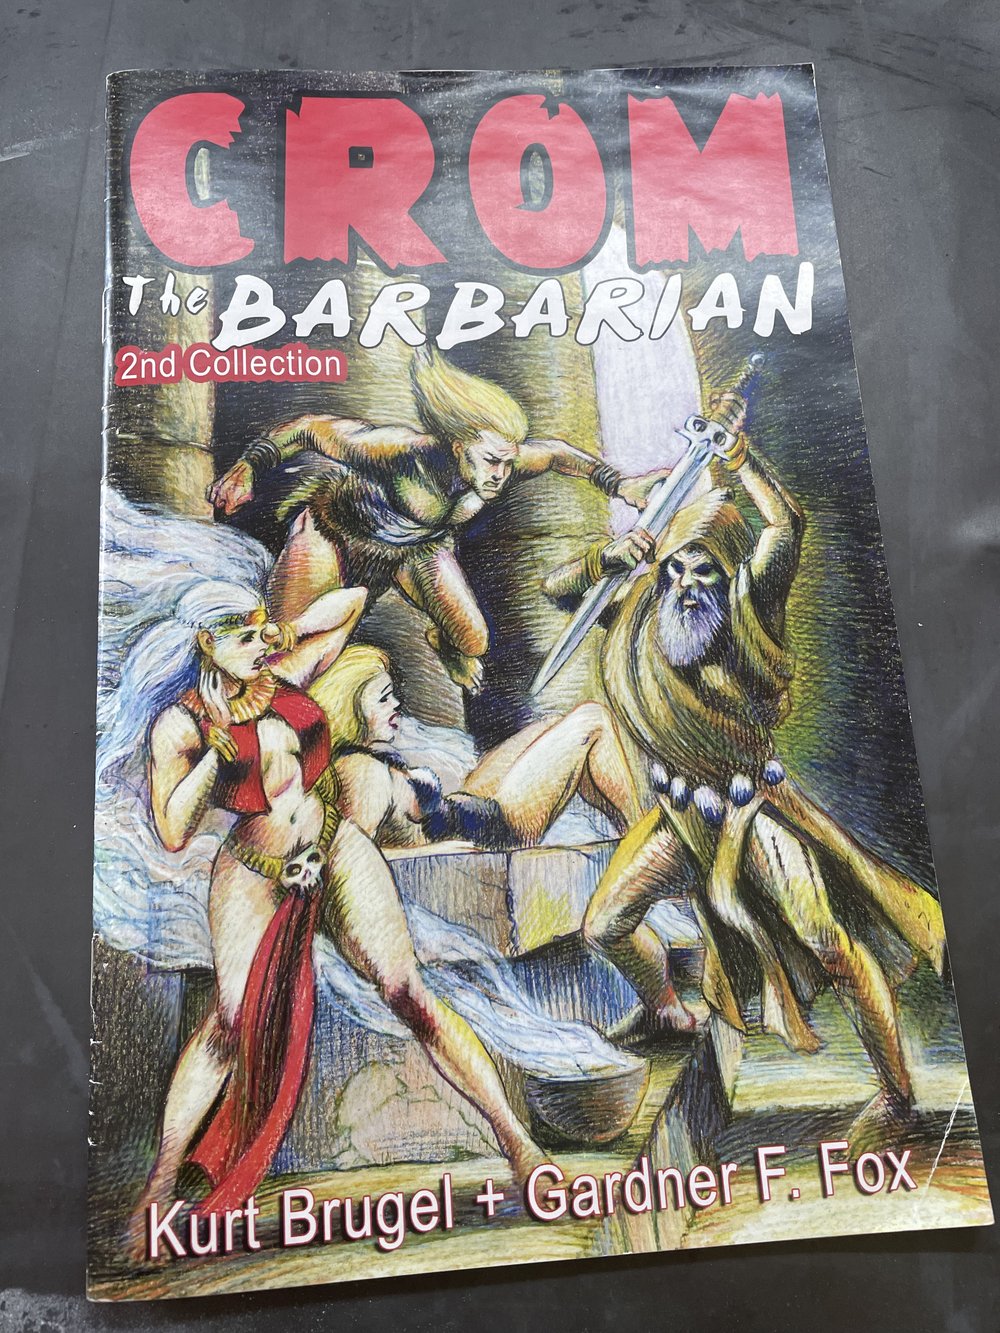 FOUR New Crom the Barbarian Stories by Kurt Brugel & Gardner Fox - B&W Art